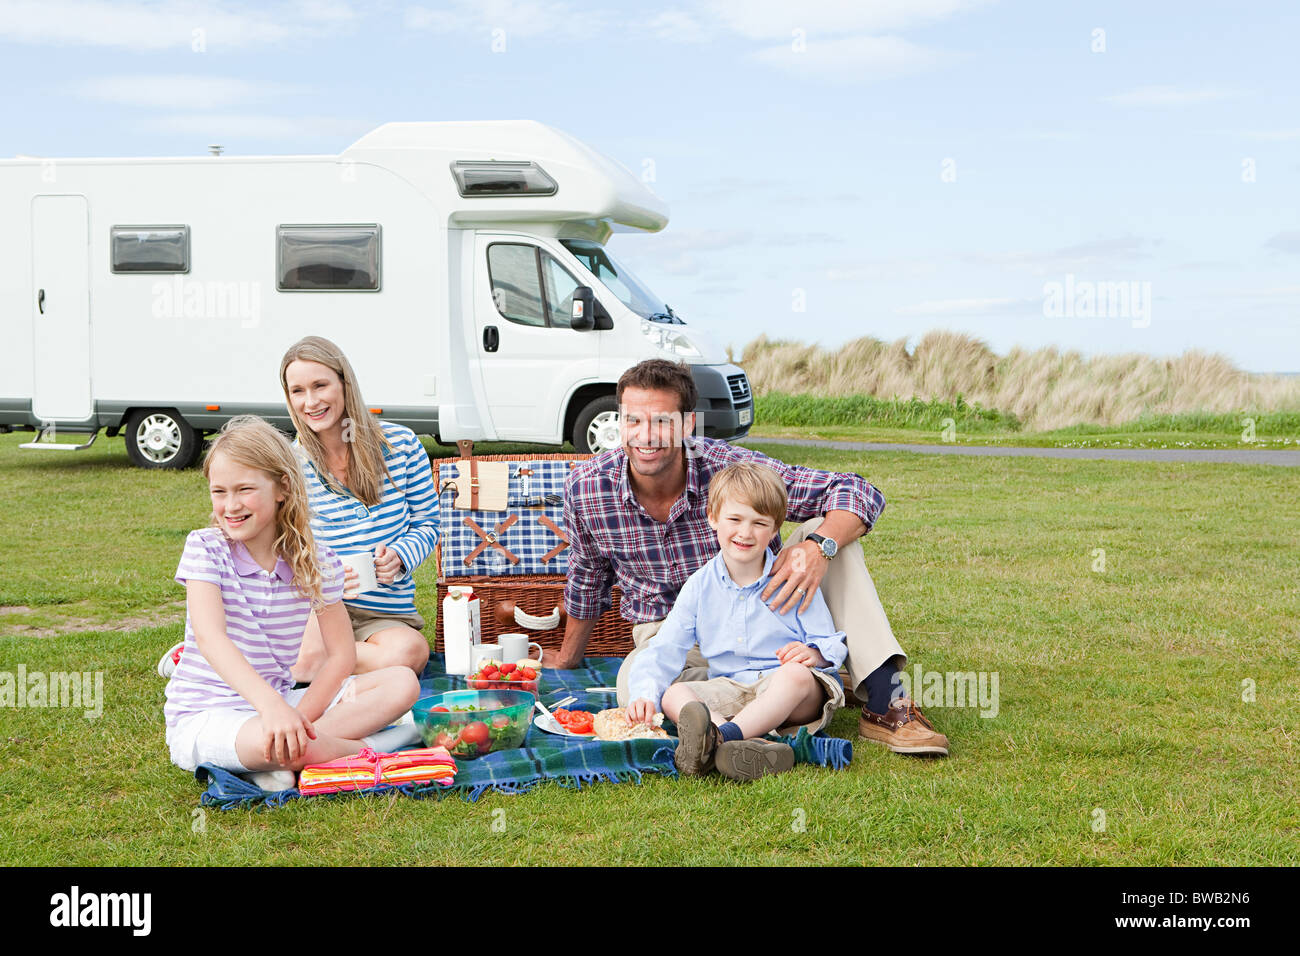 Family having picnic by caravan Stock Photo